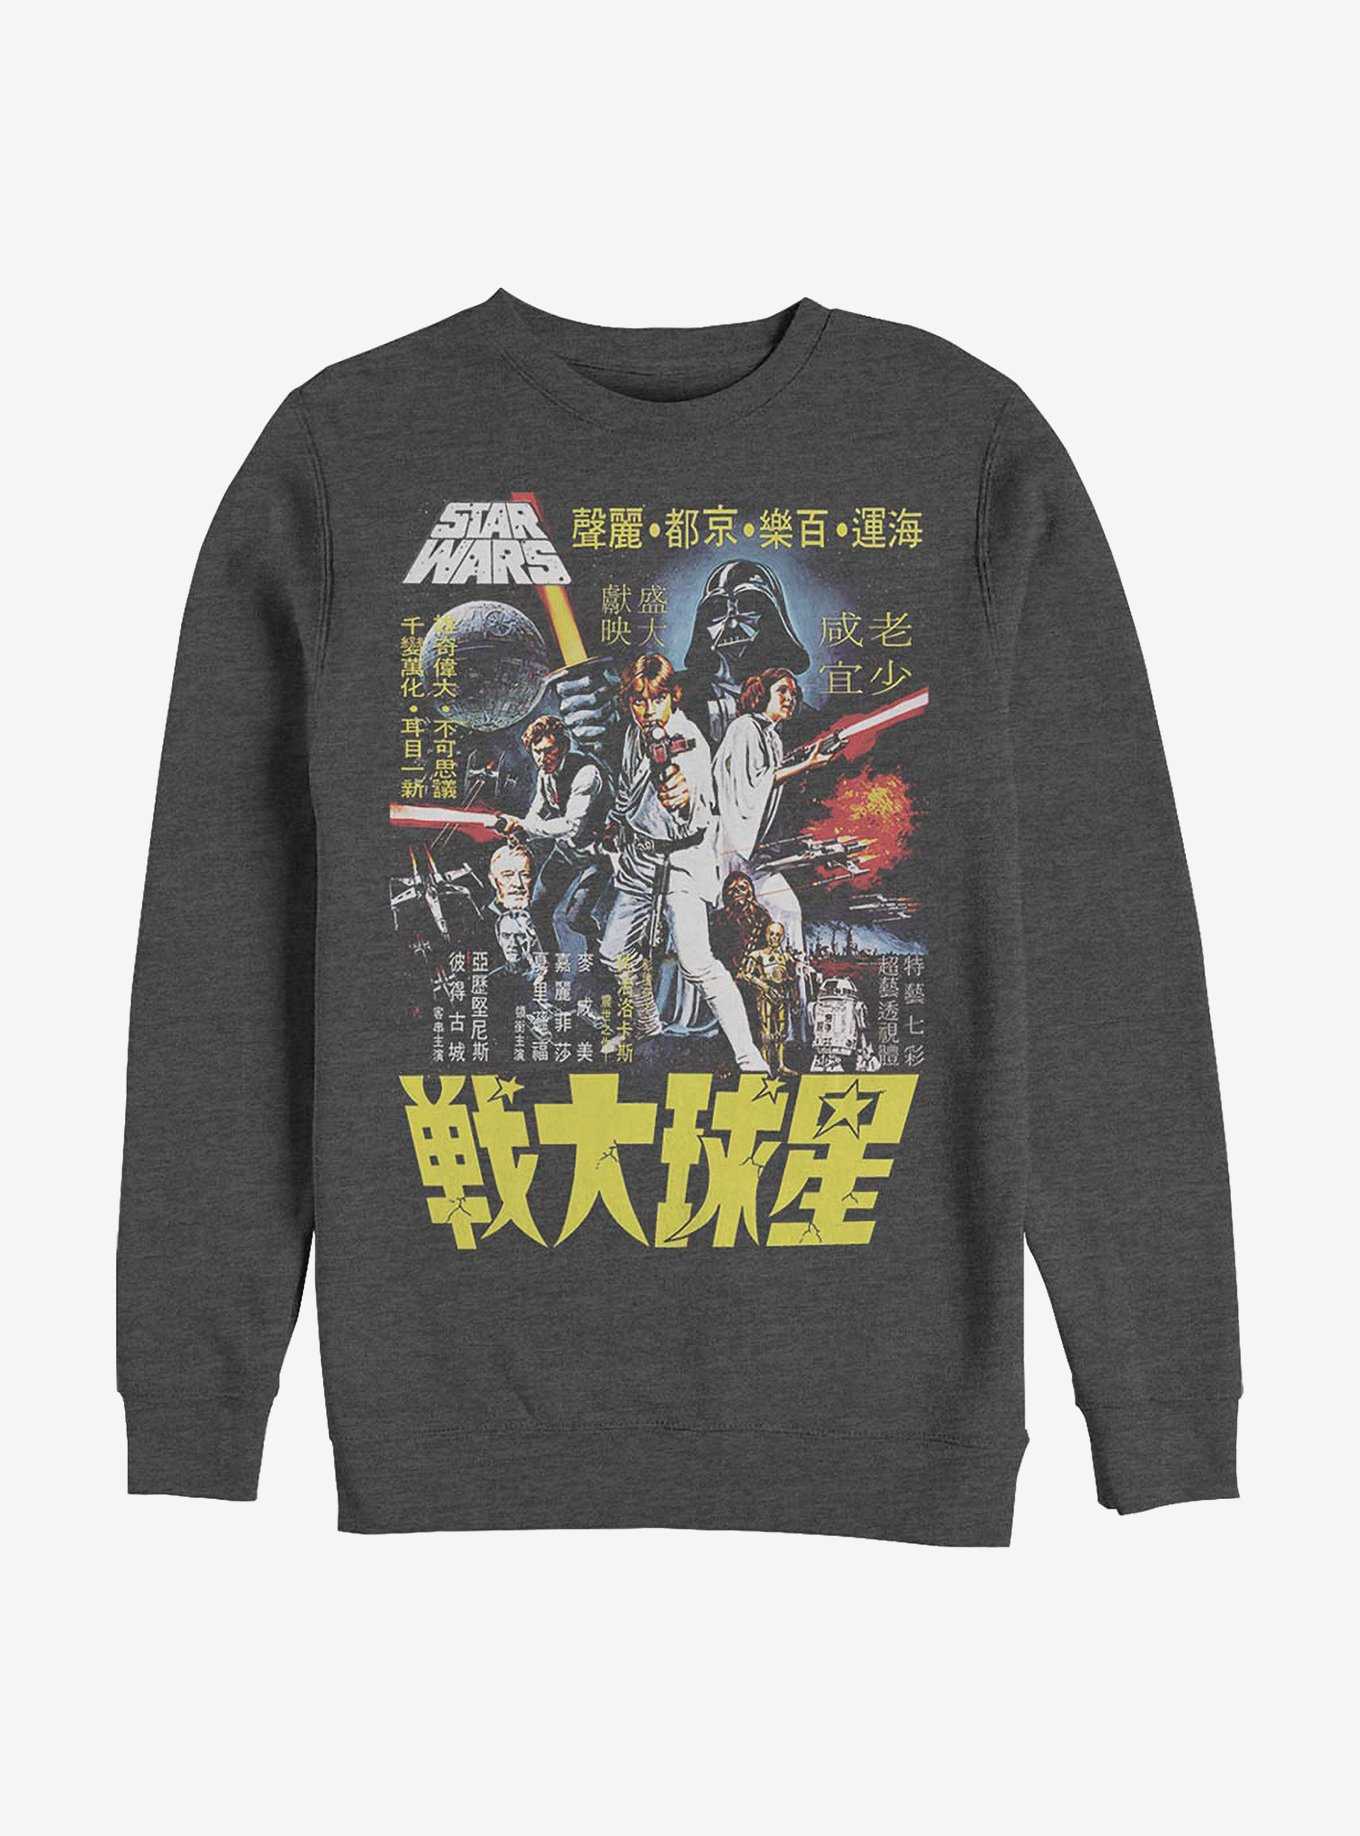 Star Wars Japanese Poster Wars Crew Sweatshirt, , hi-res